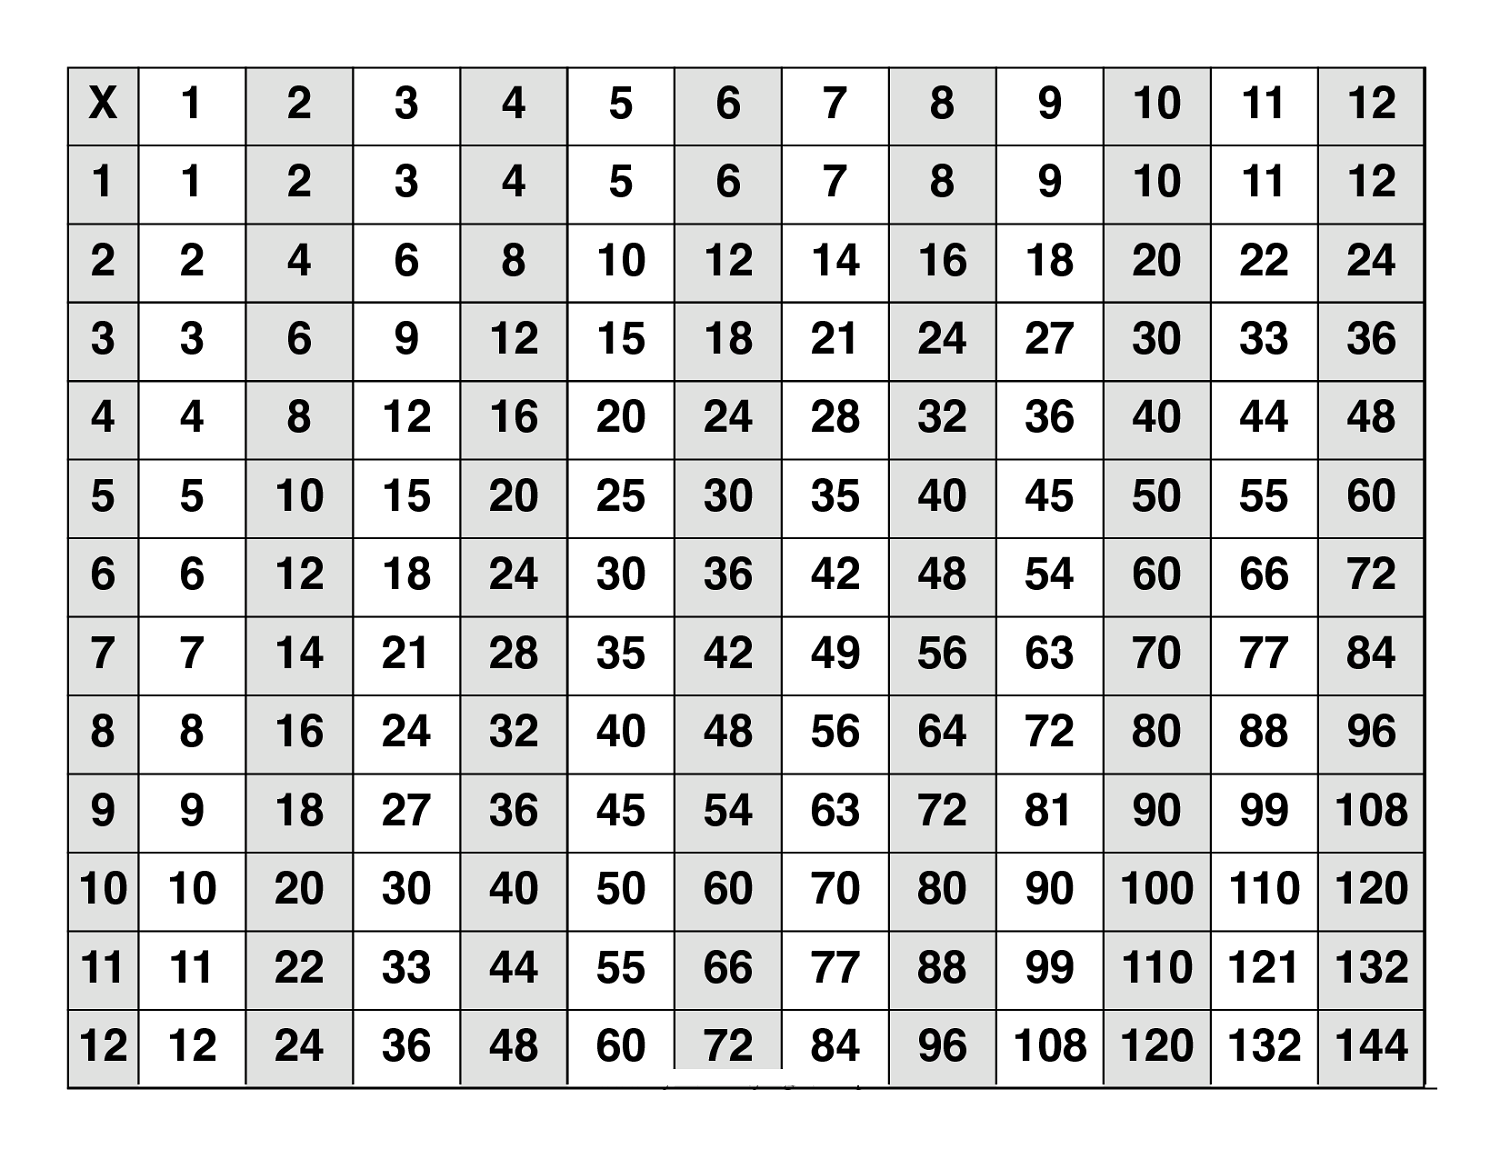 large multiplication table 2016